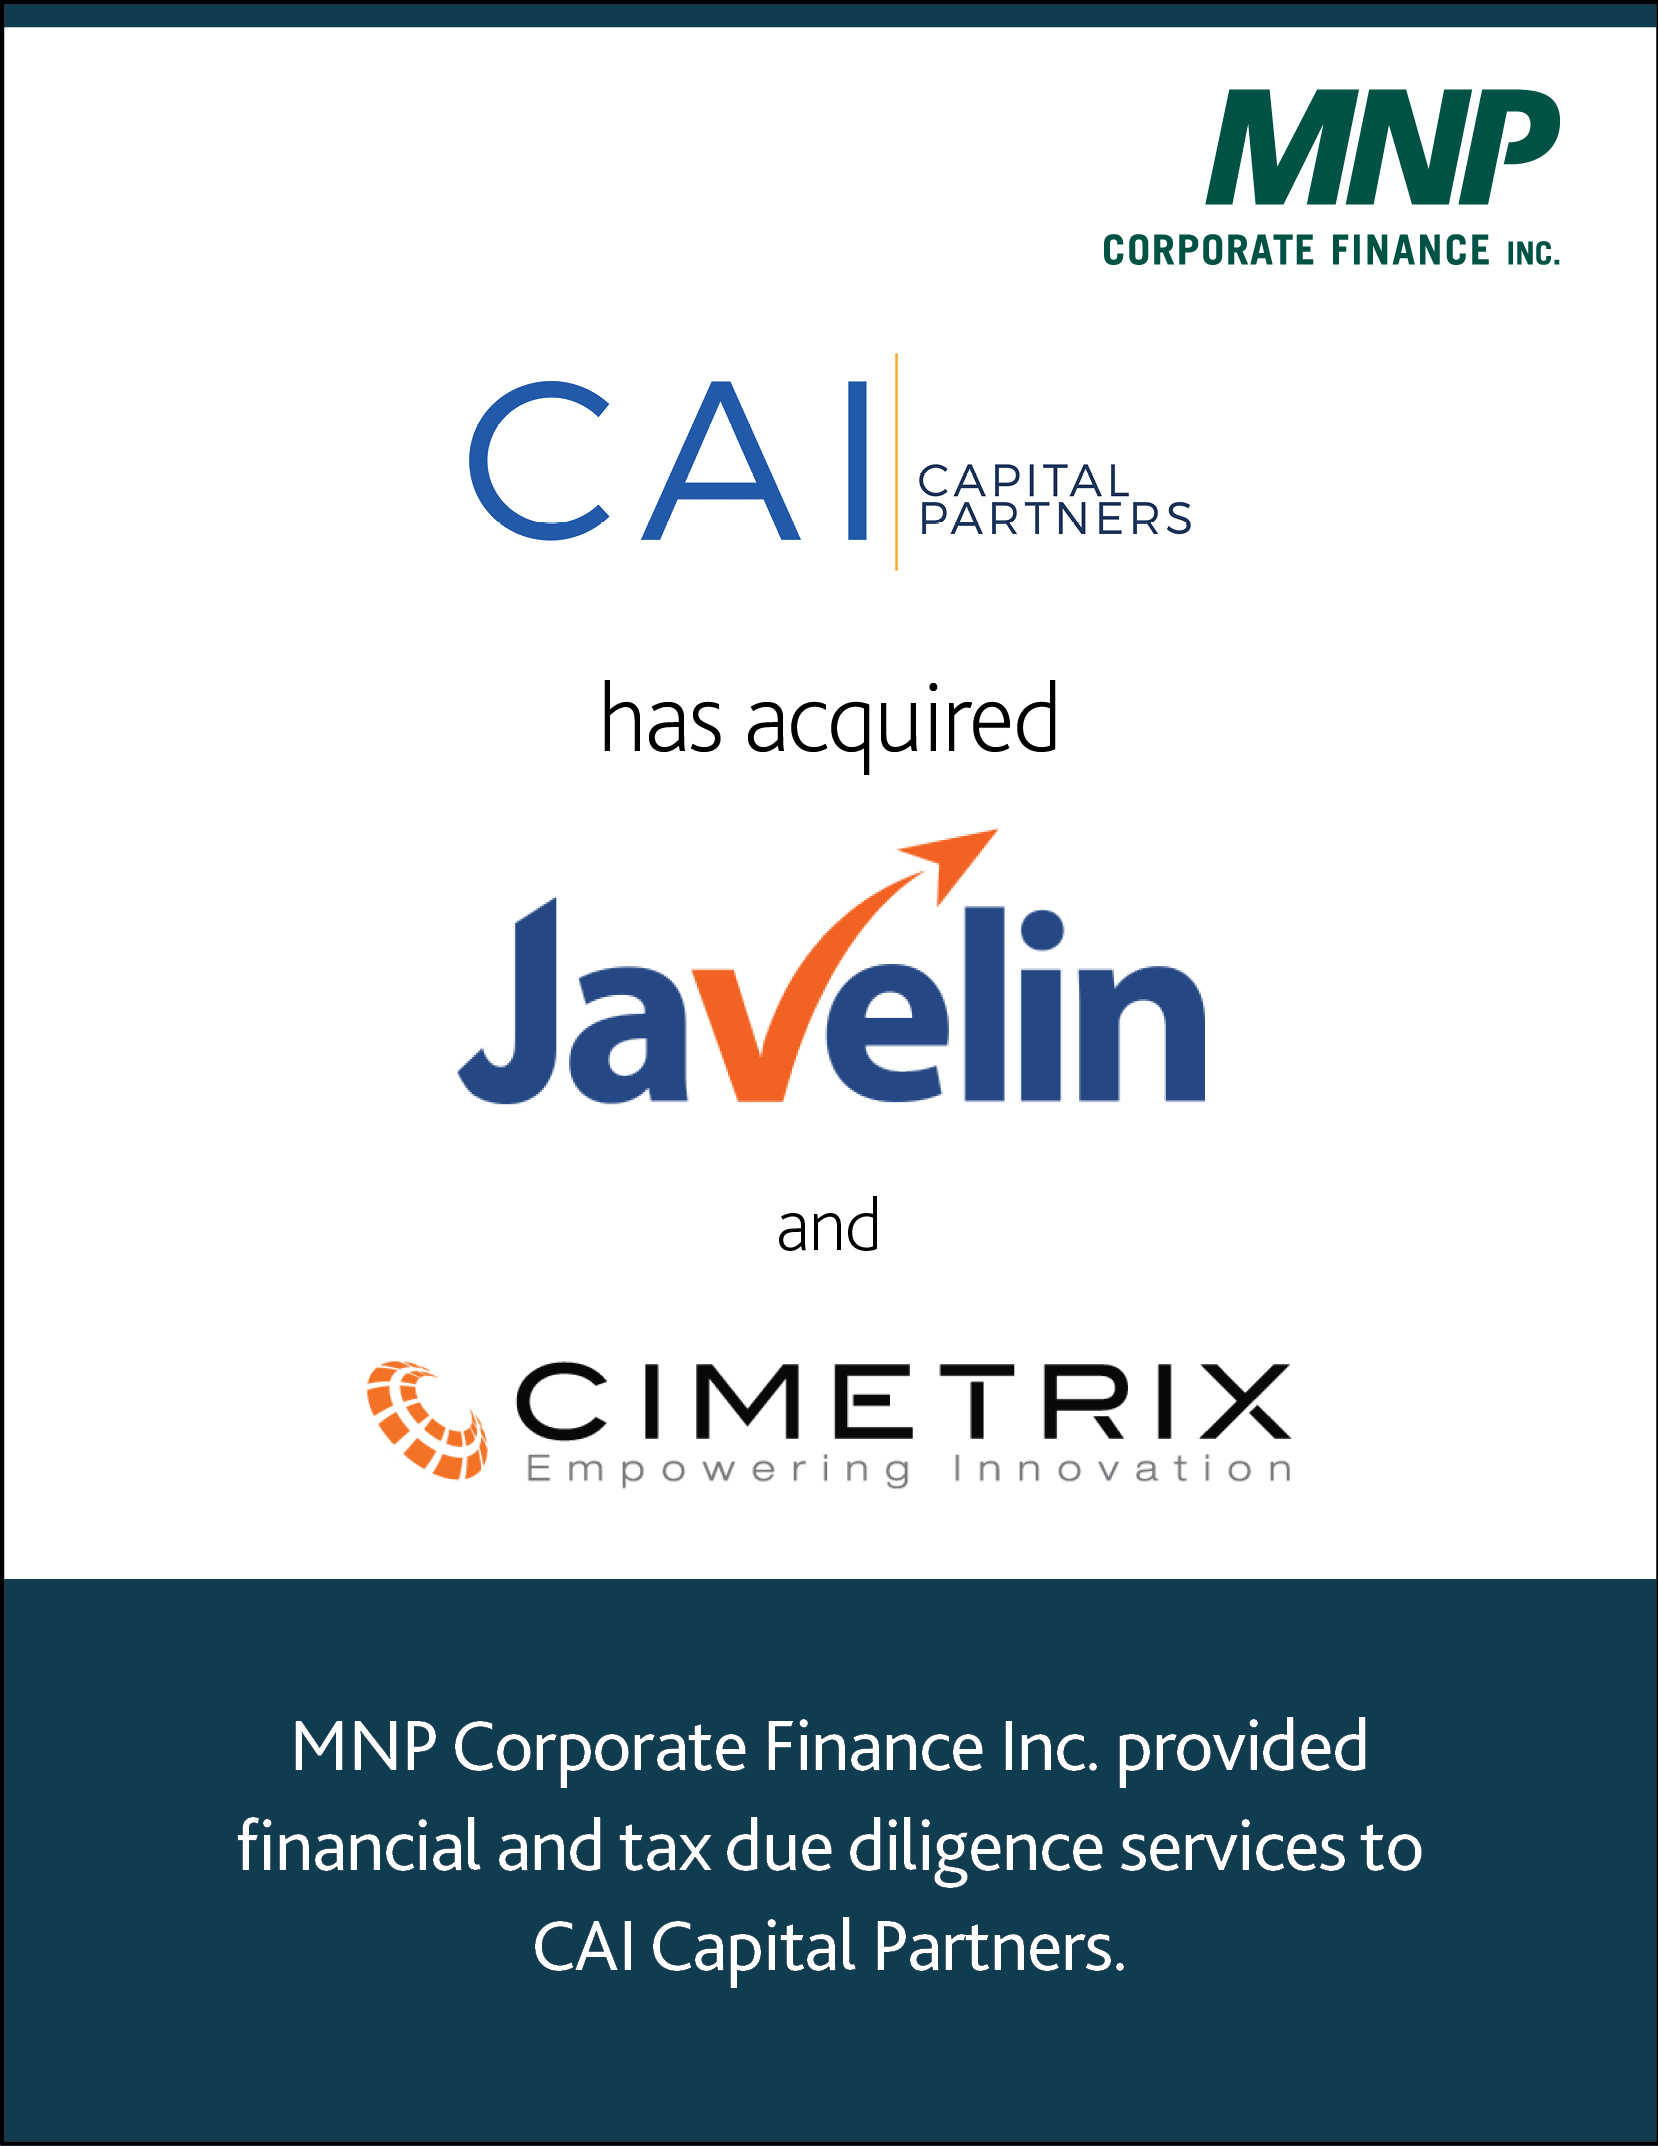 CAI Capital Partners has acquired Javelin Technologies Inc. and Cimetrix Solutions Inc.